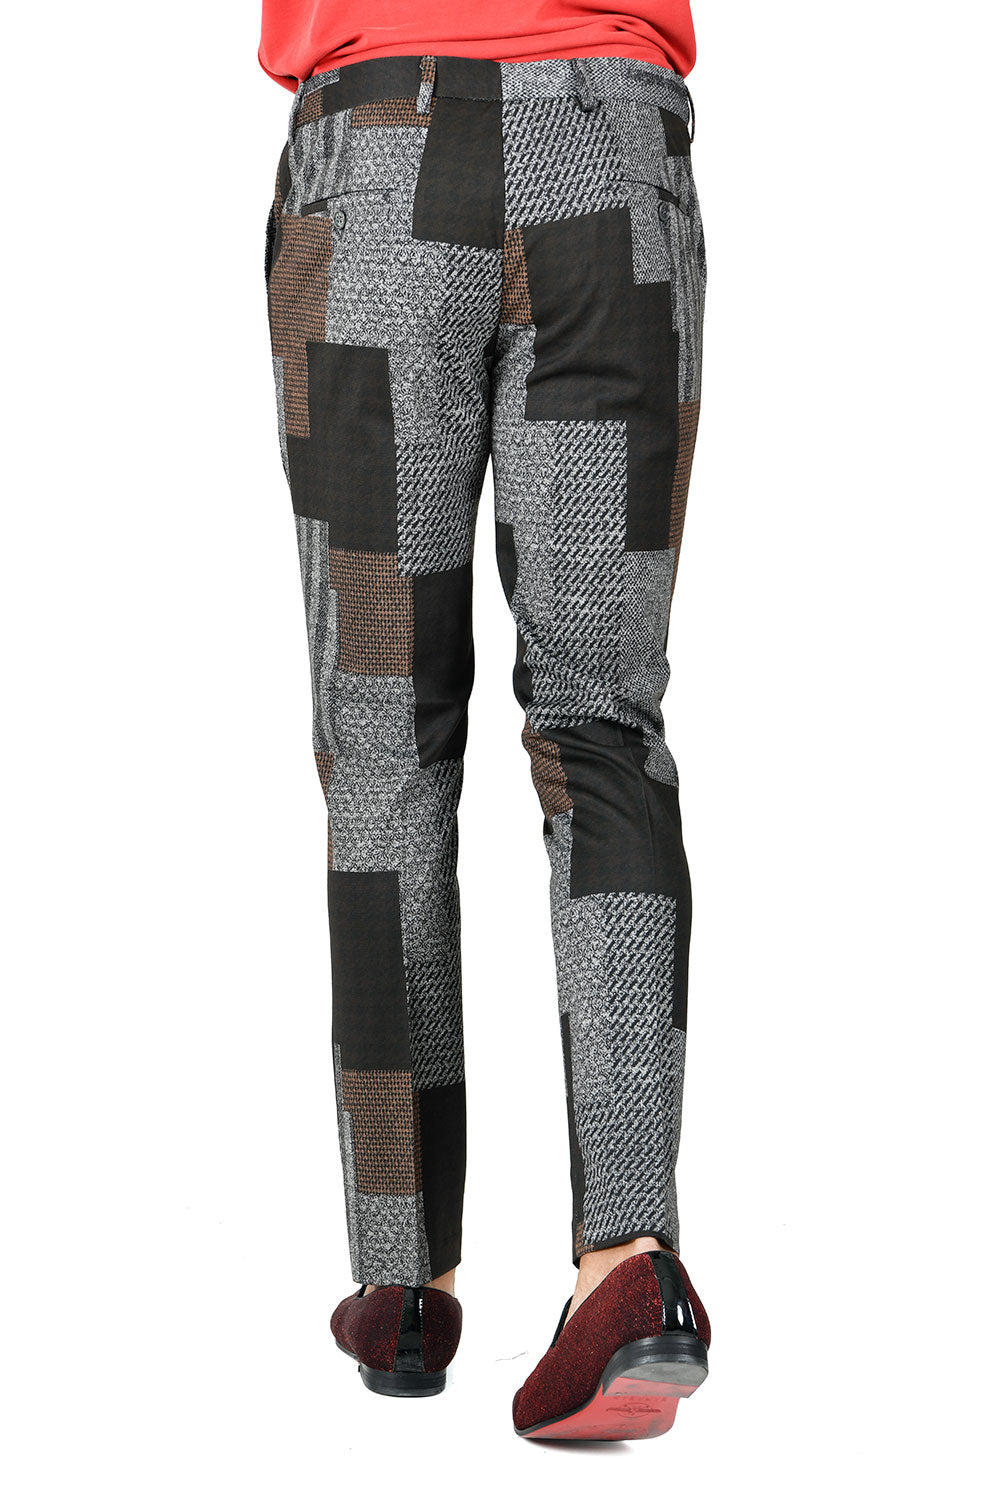 BARABAS men's checkered plaid multi color chino dress pants CP143